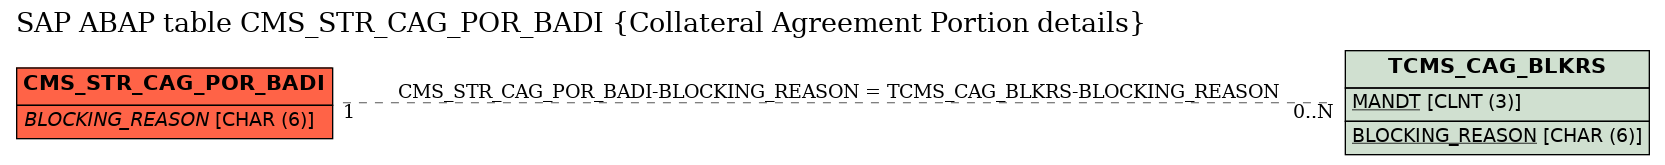 E-R Diagram for table CMS_STR_CAG_POR_BADI (Collateral Agreement Portion details)